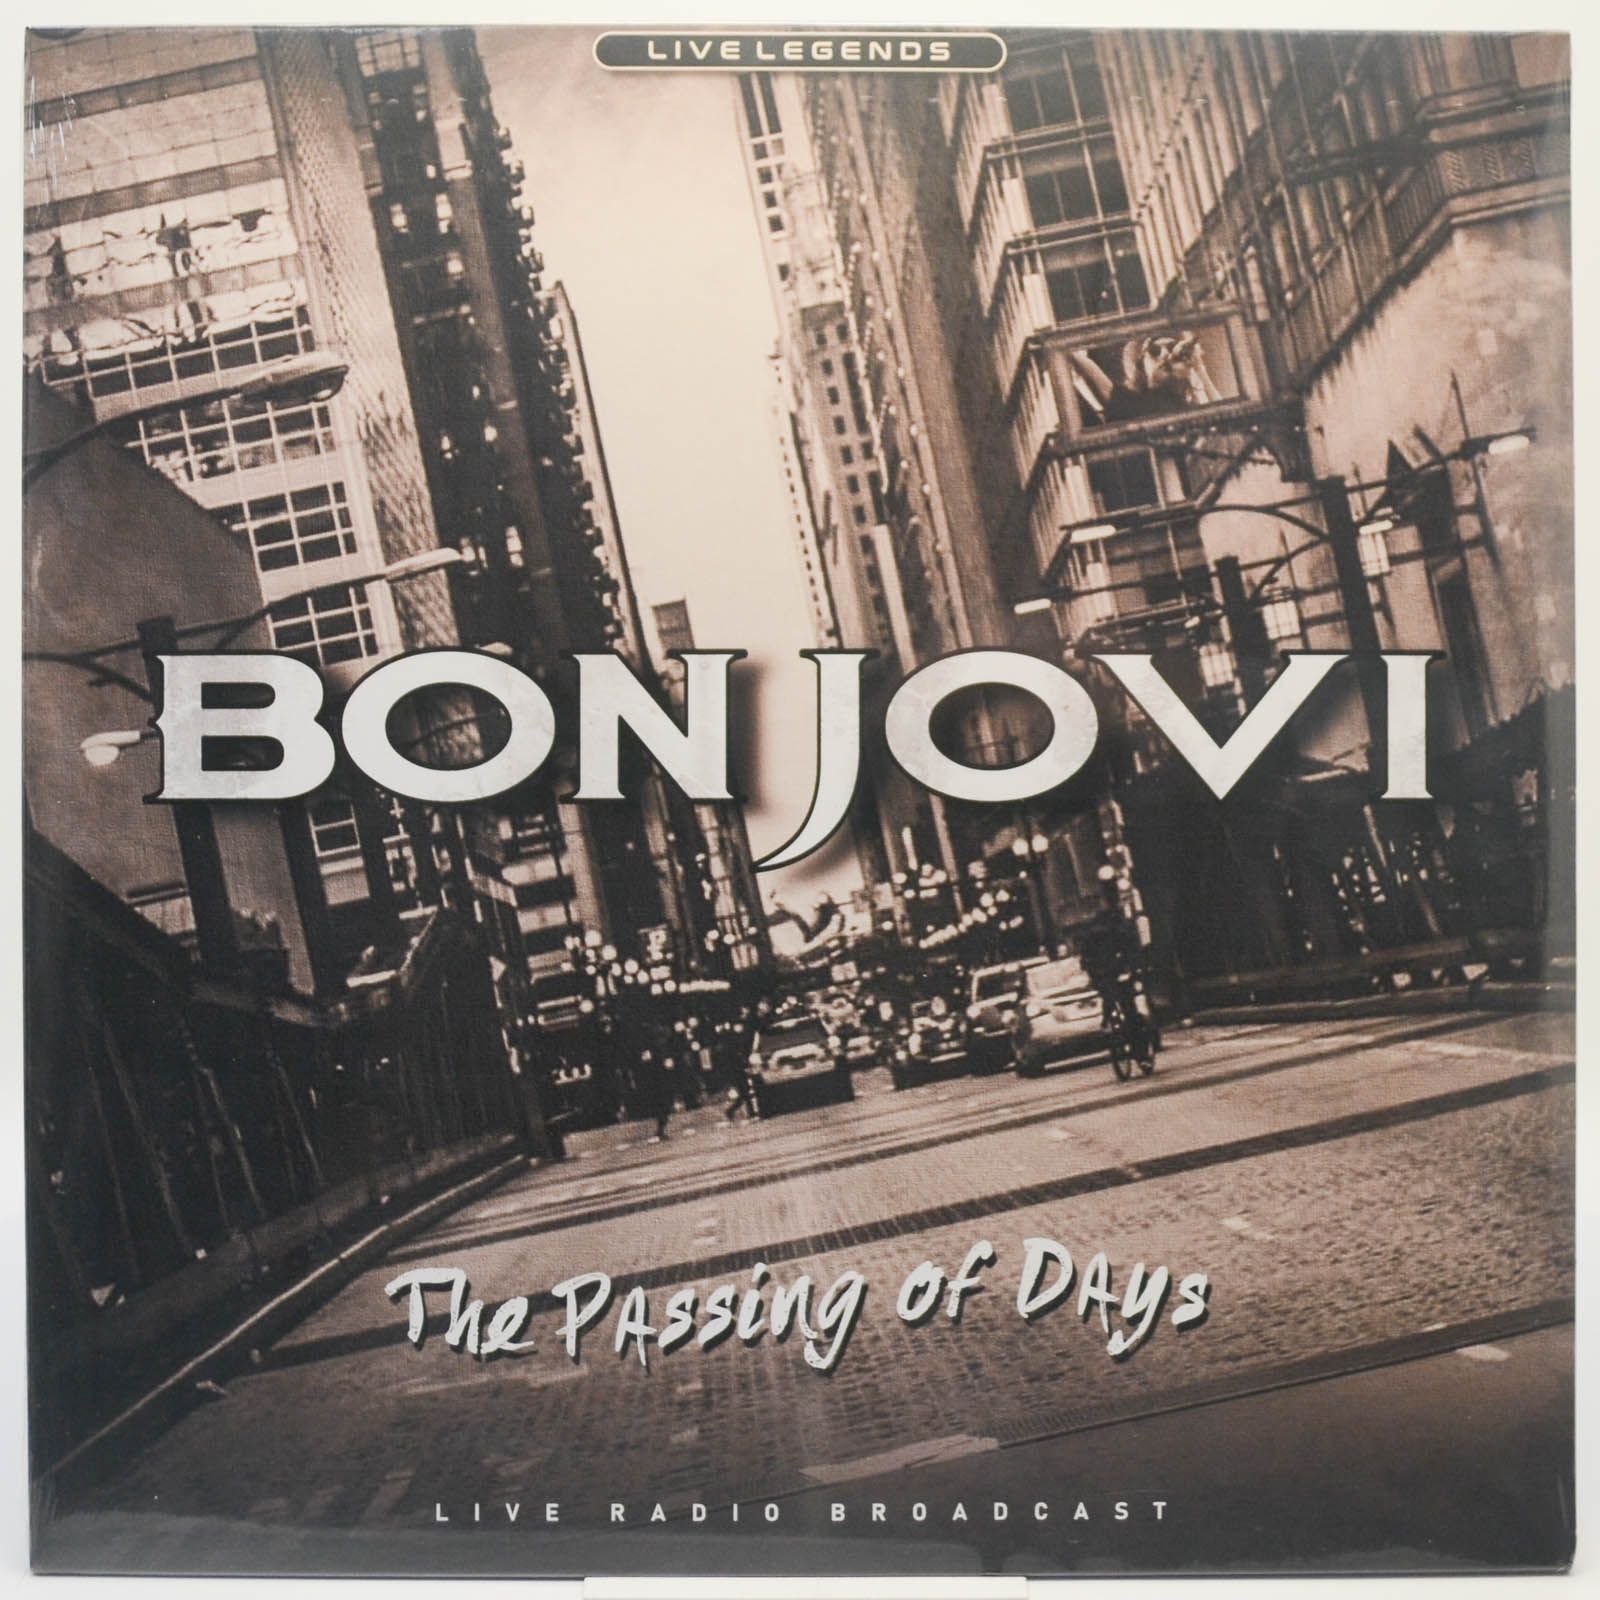 Bon Jovi — The Passing Of Days (Live Radio Broadcast), 2020